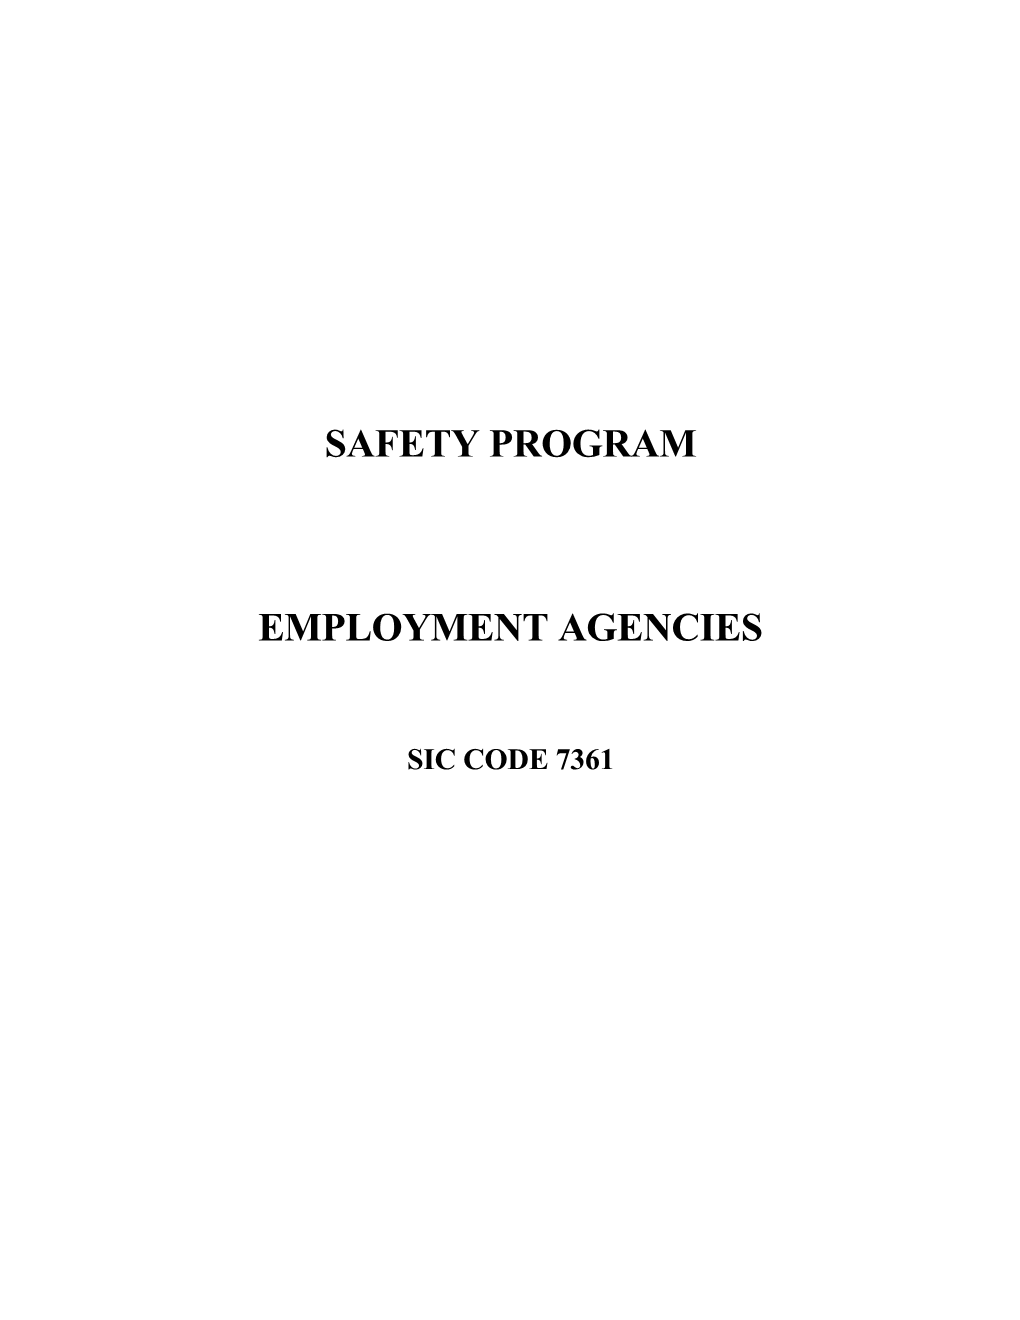 Employment Agencies Safety Program